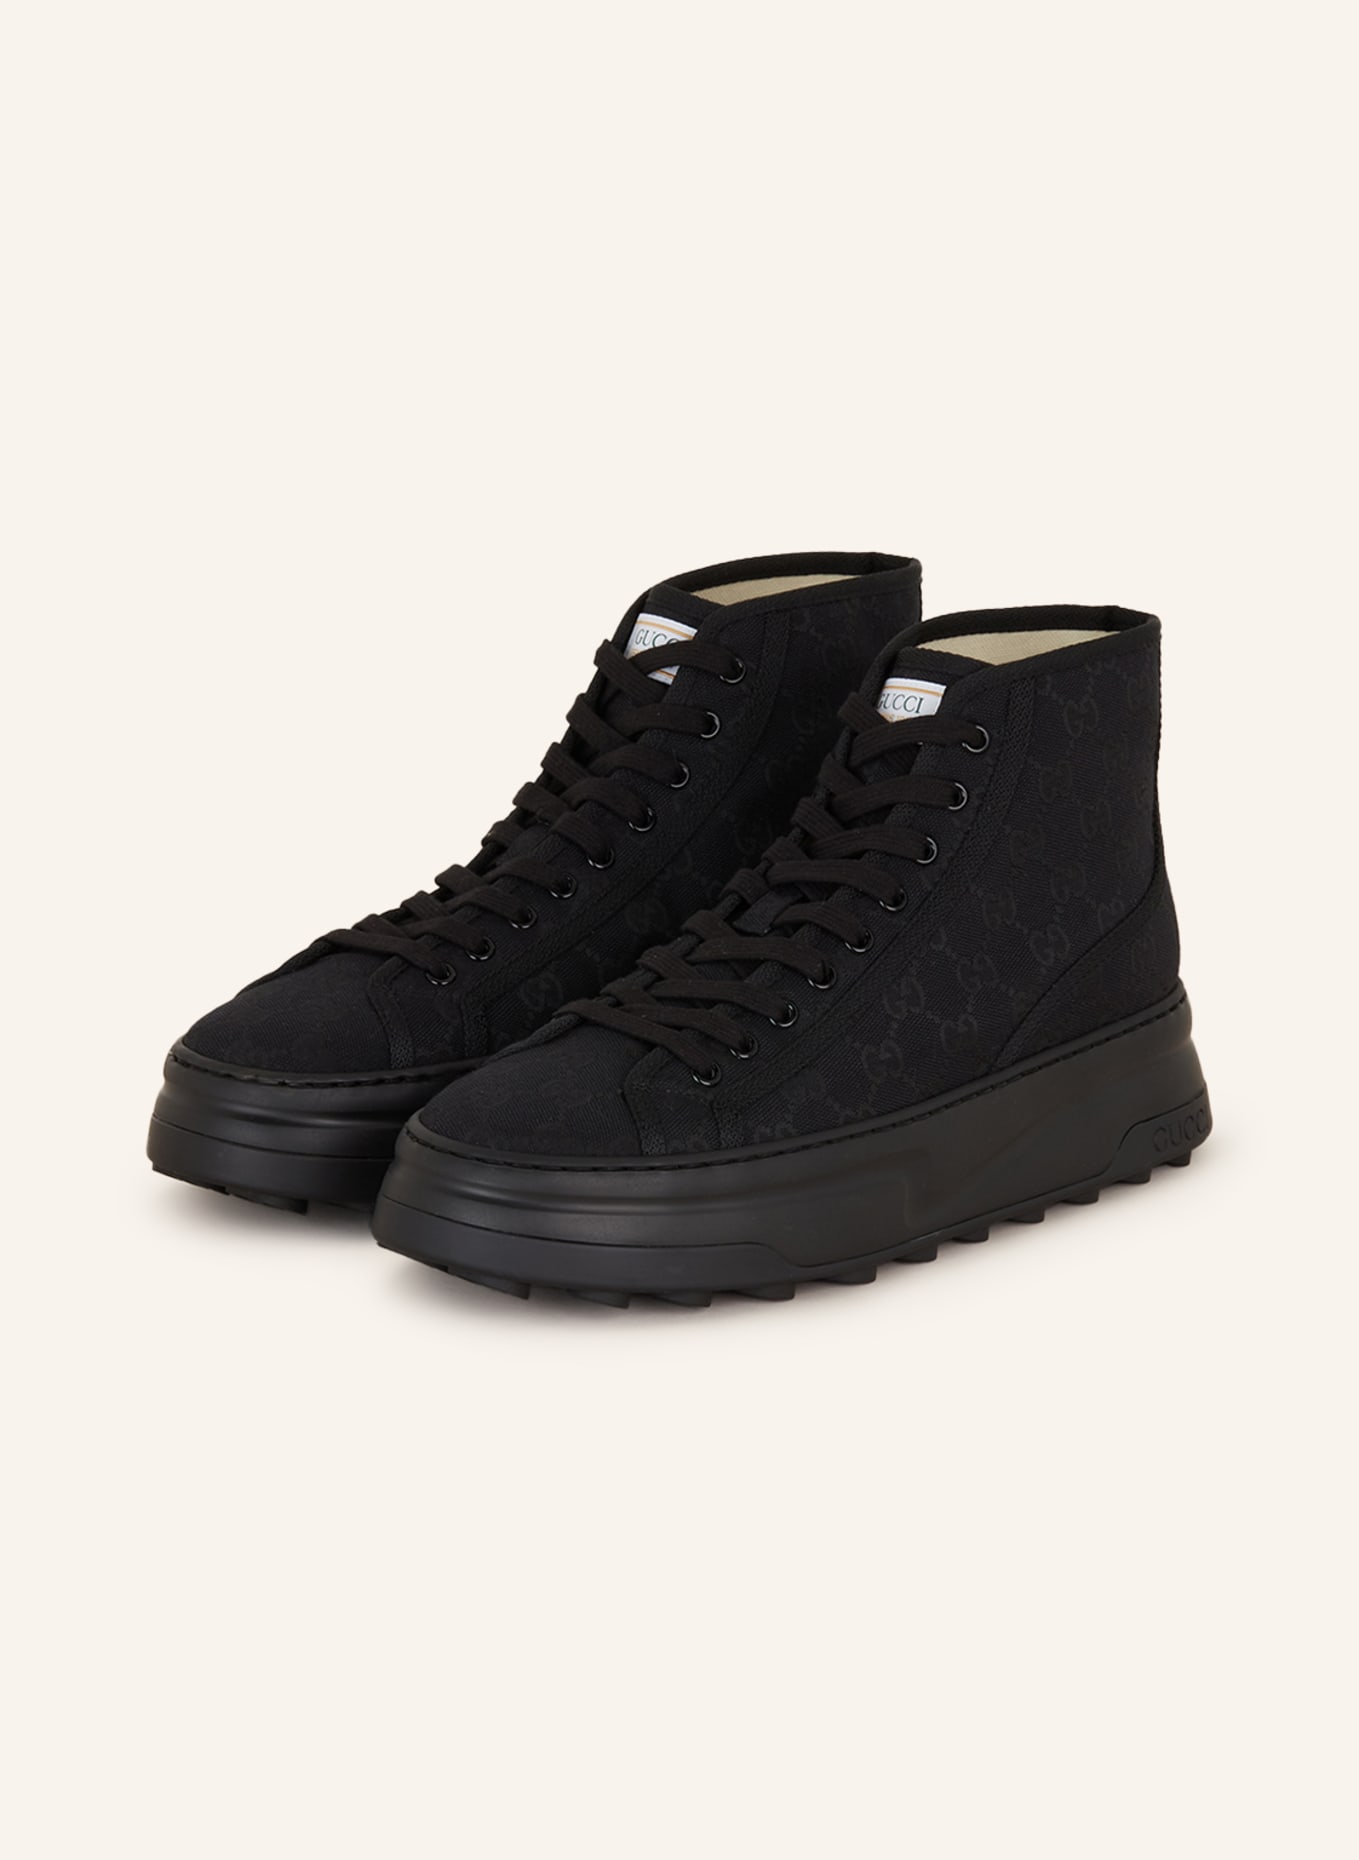 GUCCI Hightop-Sneaker, Farbe: 1000 BLACK/BLACK (Bild 1)